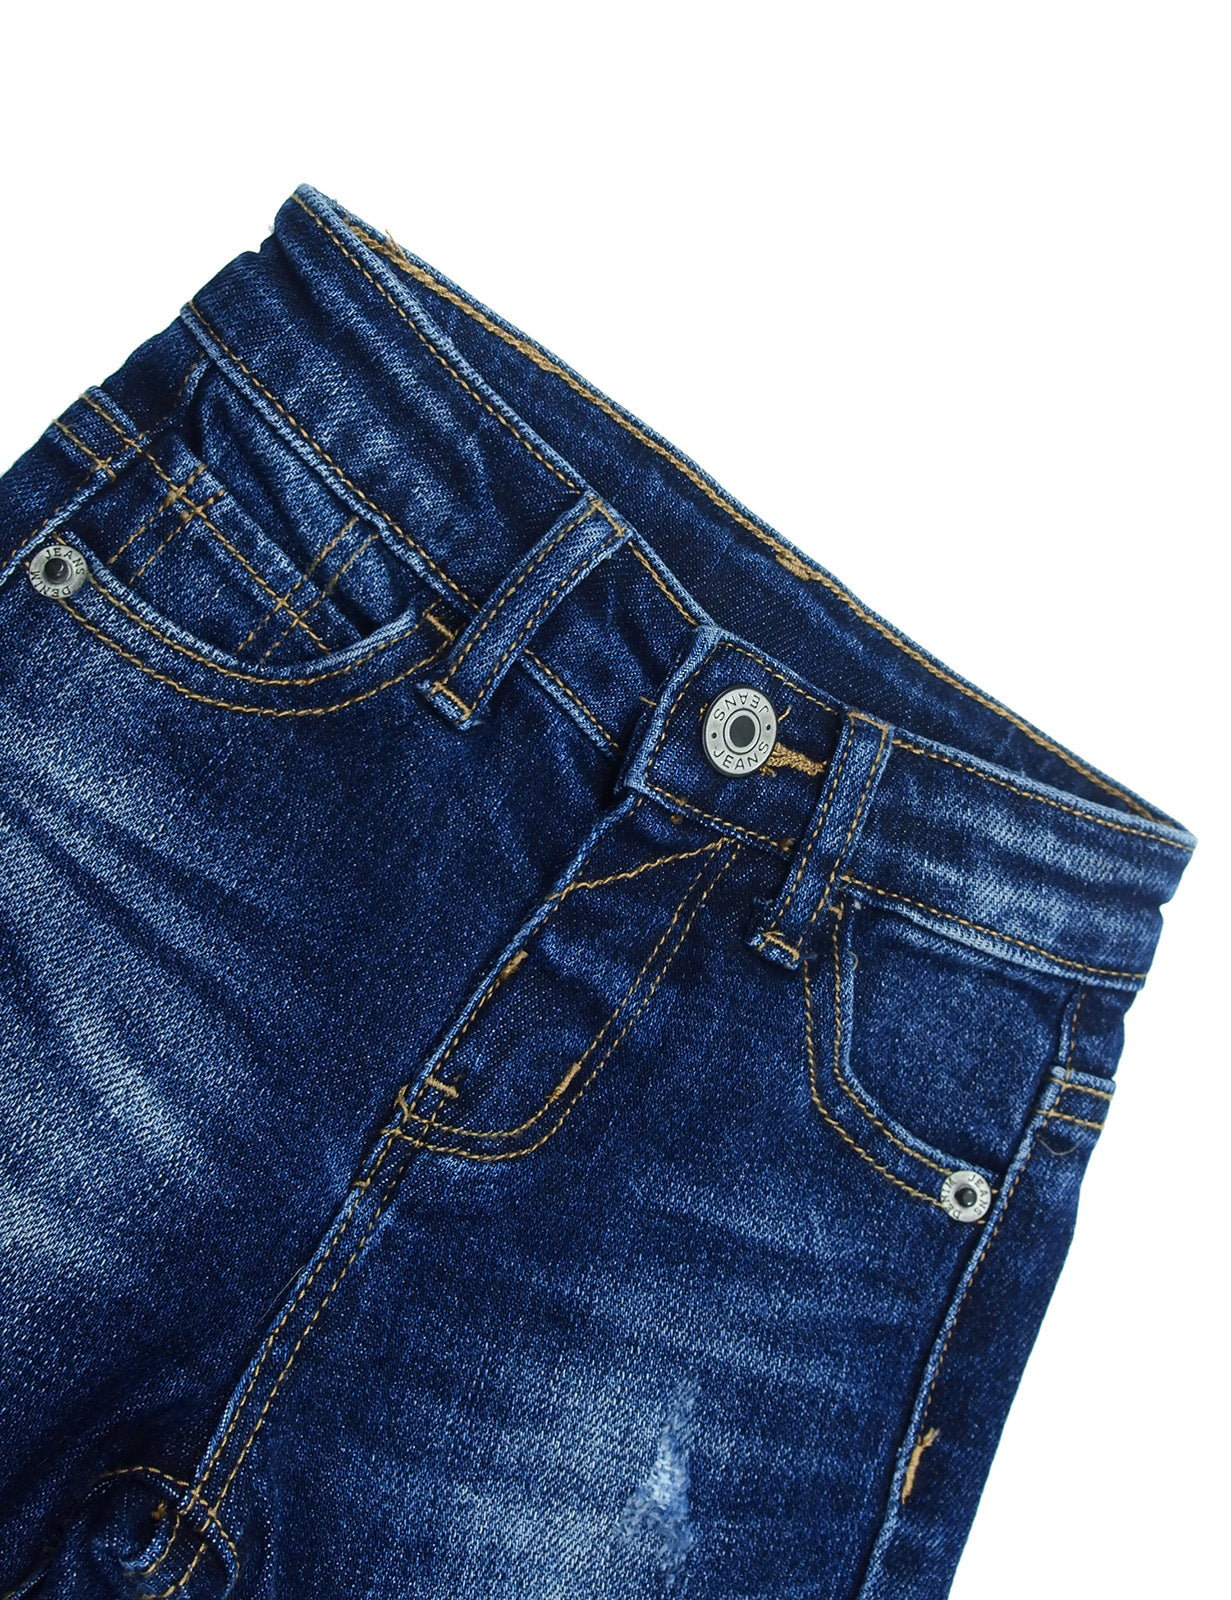 Little Kid Elastic Band Ripped Fresh Denim Jeans Pants